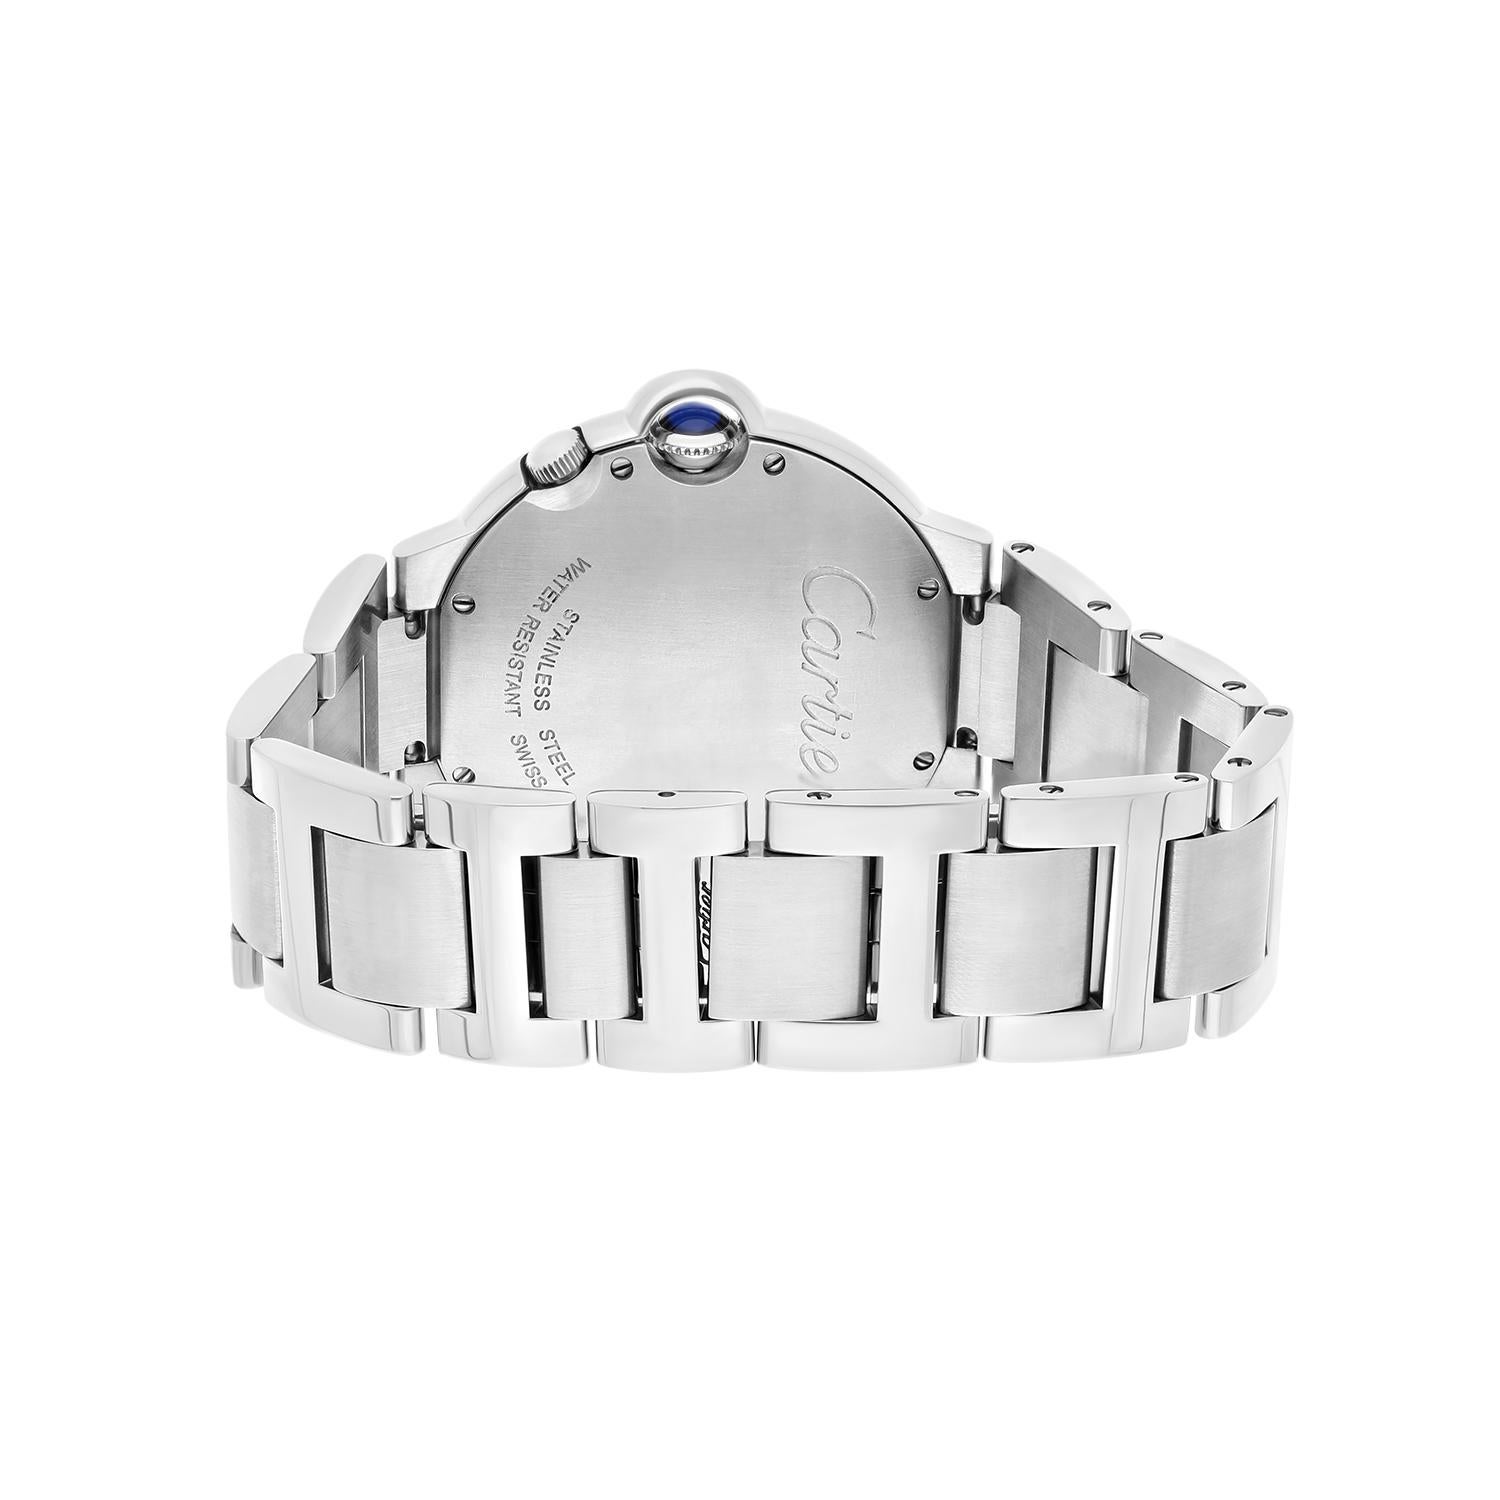 Cartier Ballon Bleu Stainless Steel Two Timezone Quartz Watch 38MM W6920011 For Sale 2